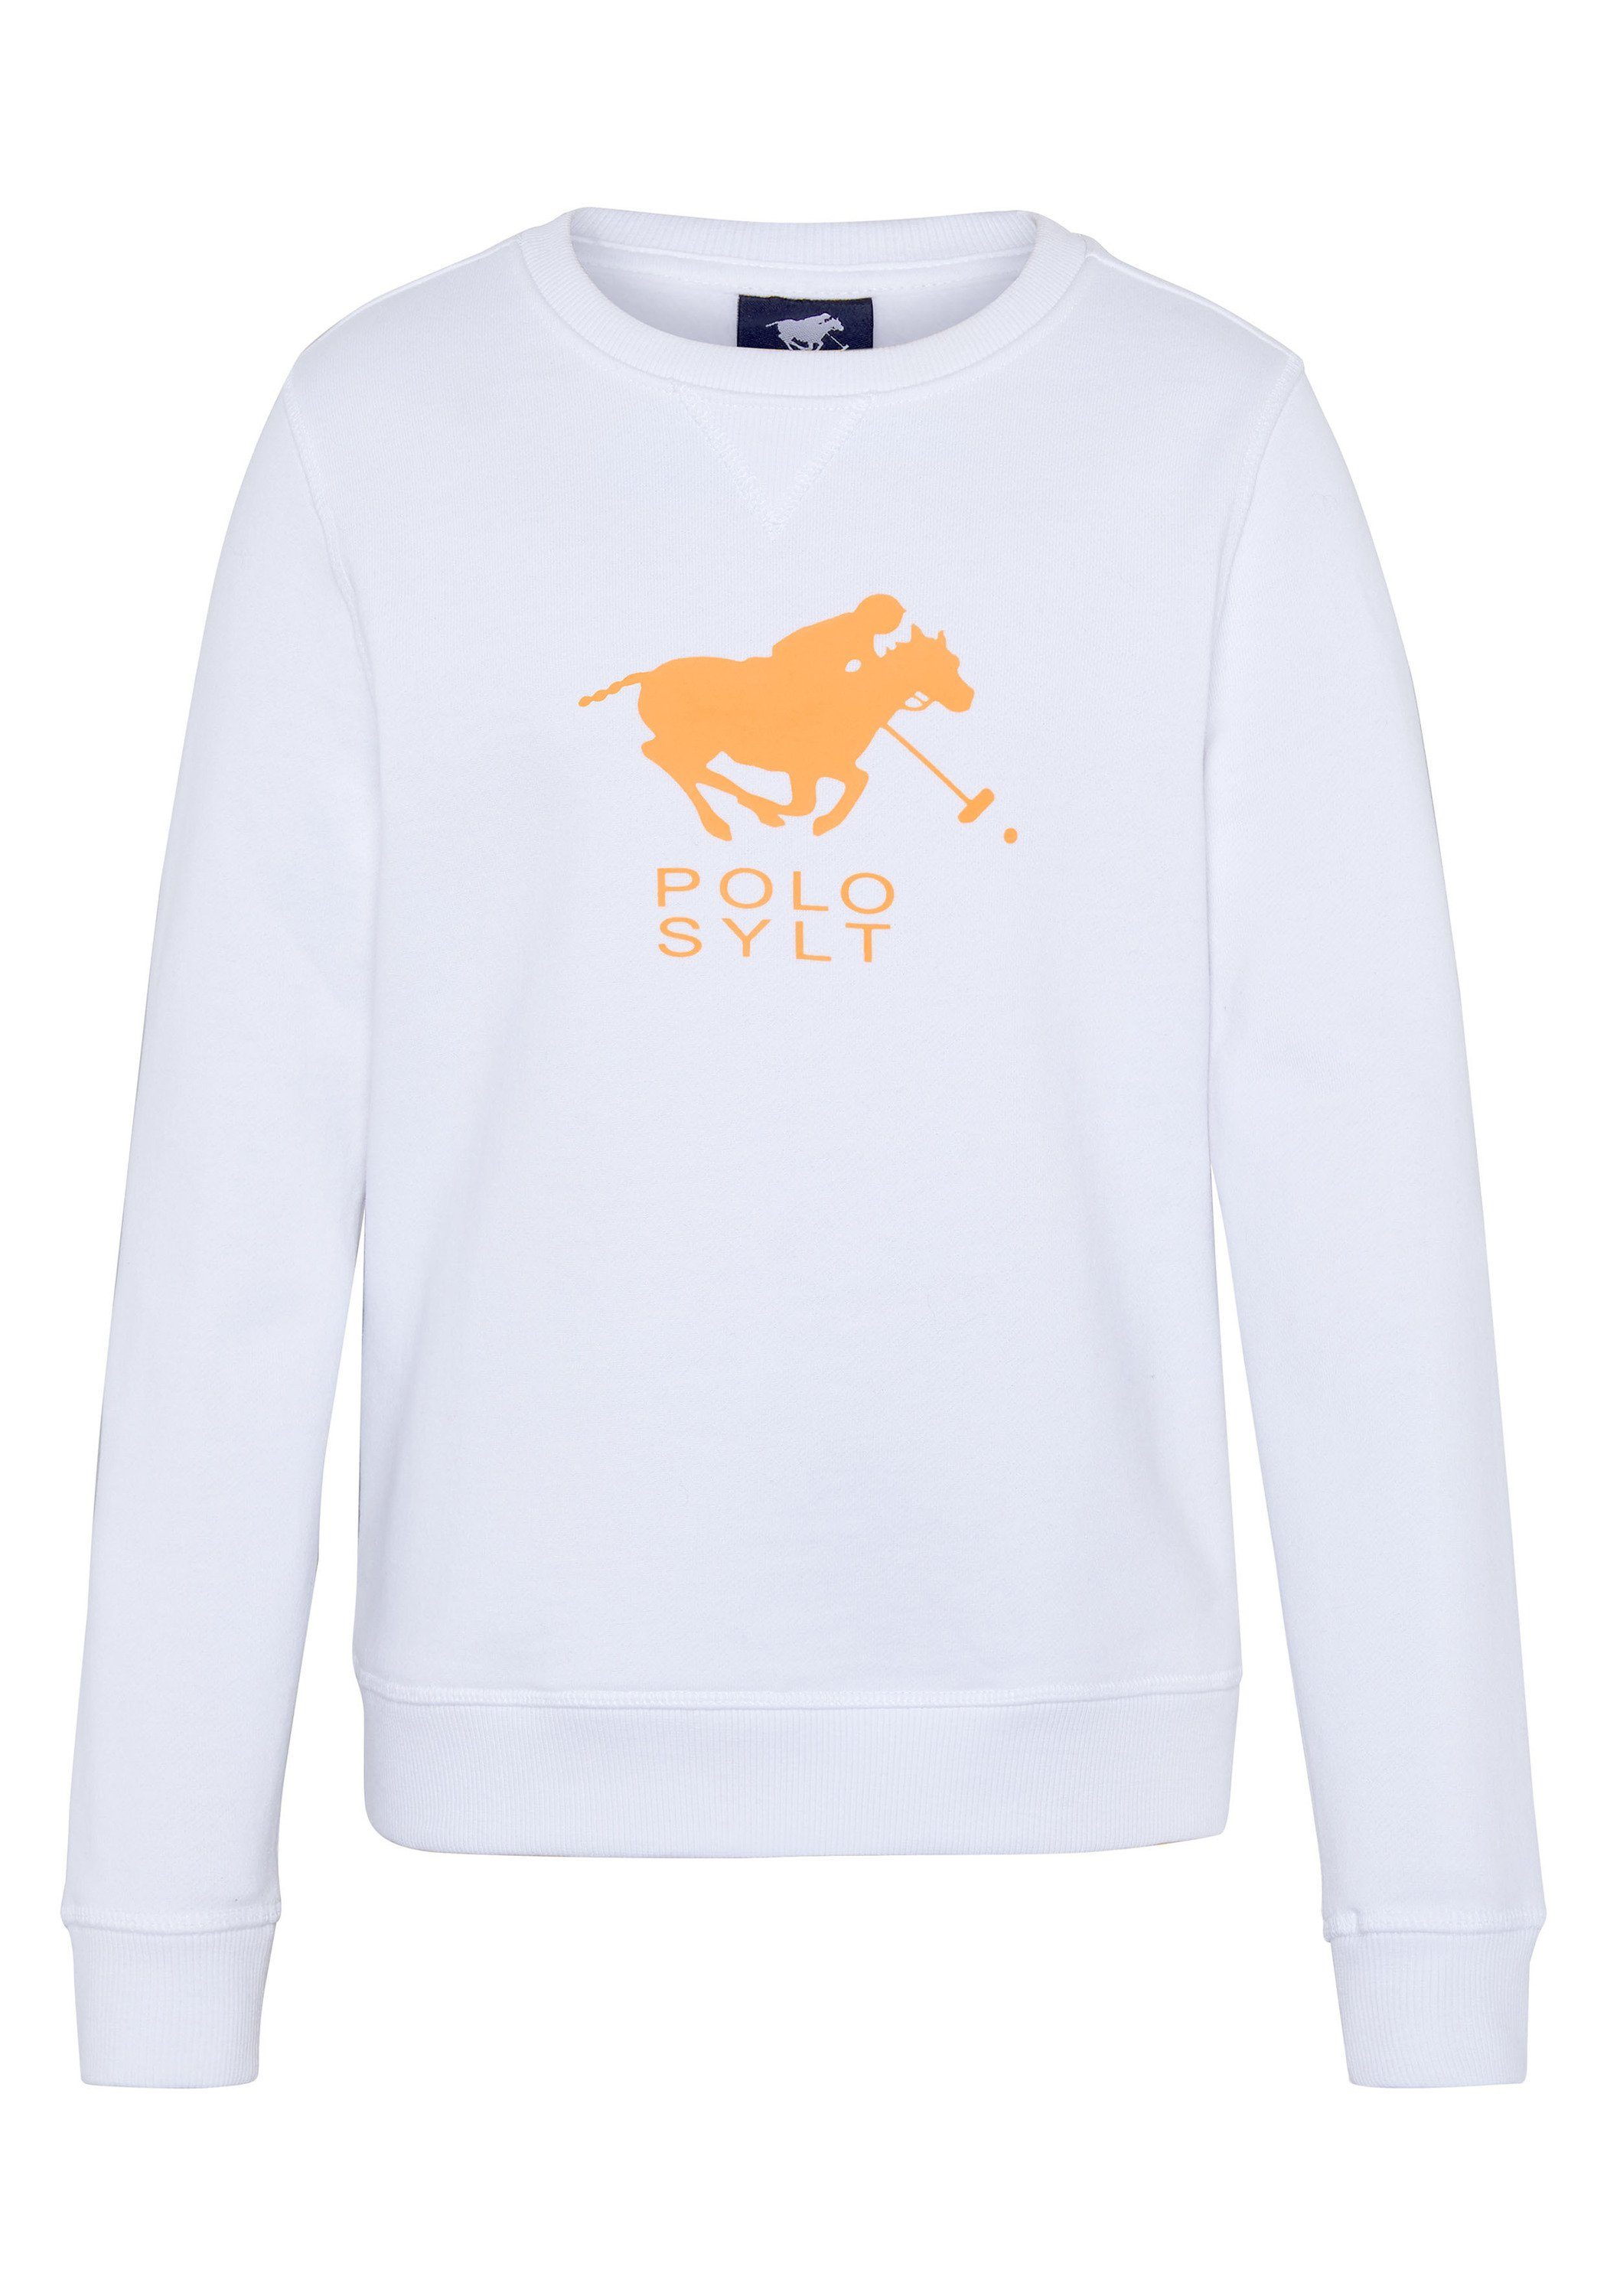 Polo Sylt Sweatshirt mit Label-Print Bright White